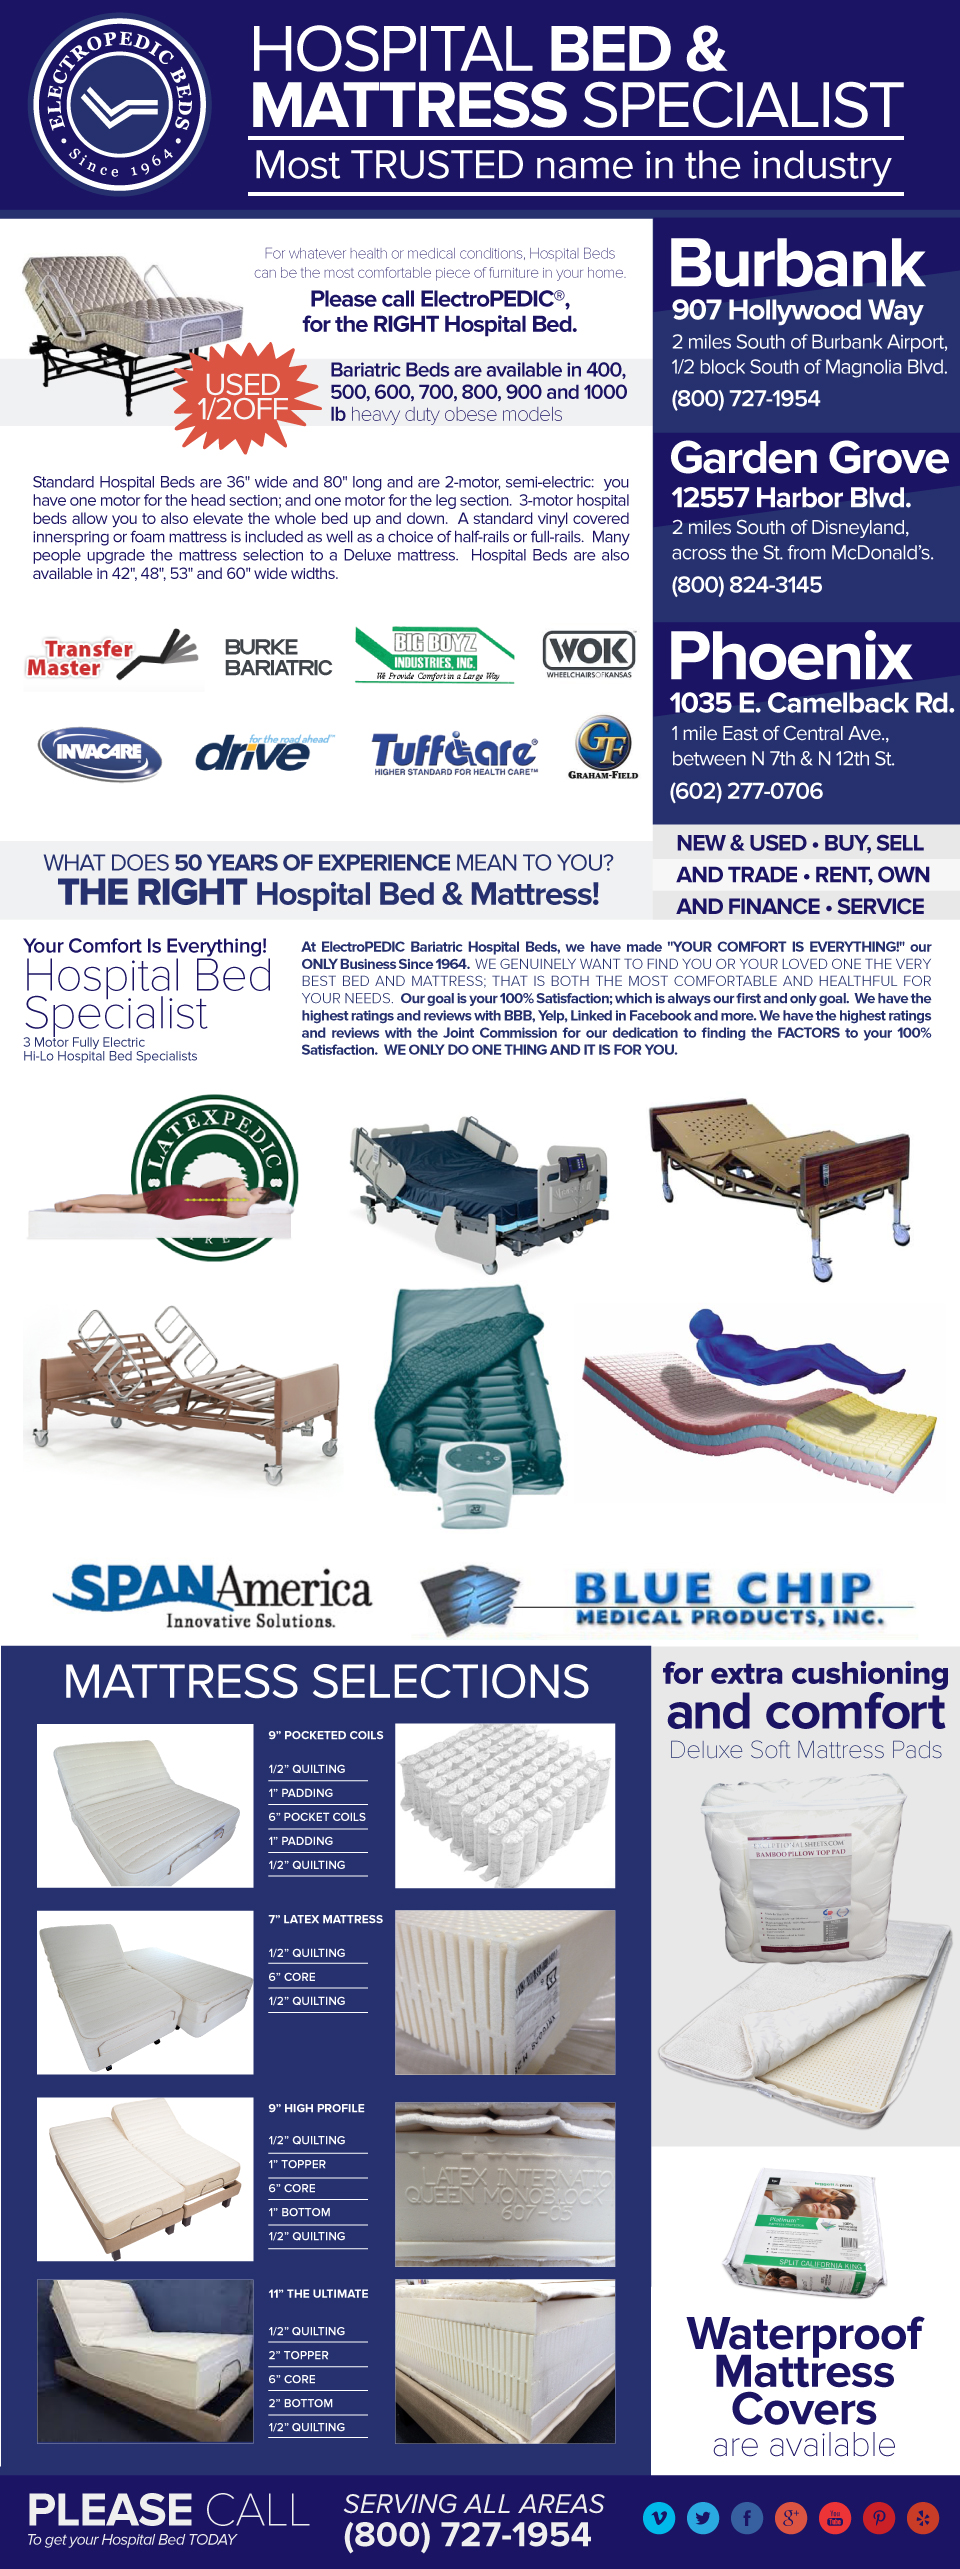 bariatric room: bariatrics hospital beds and mattresses